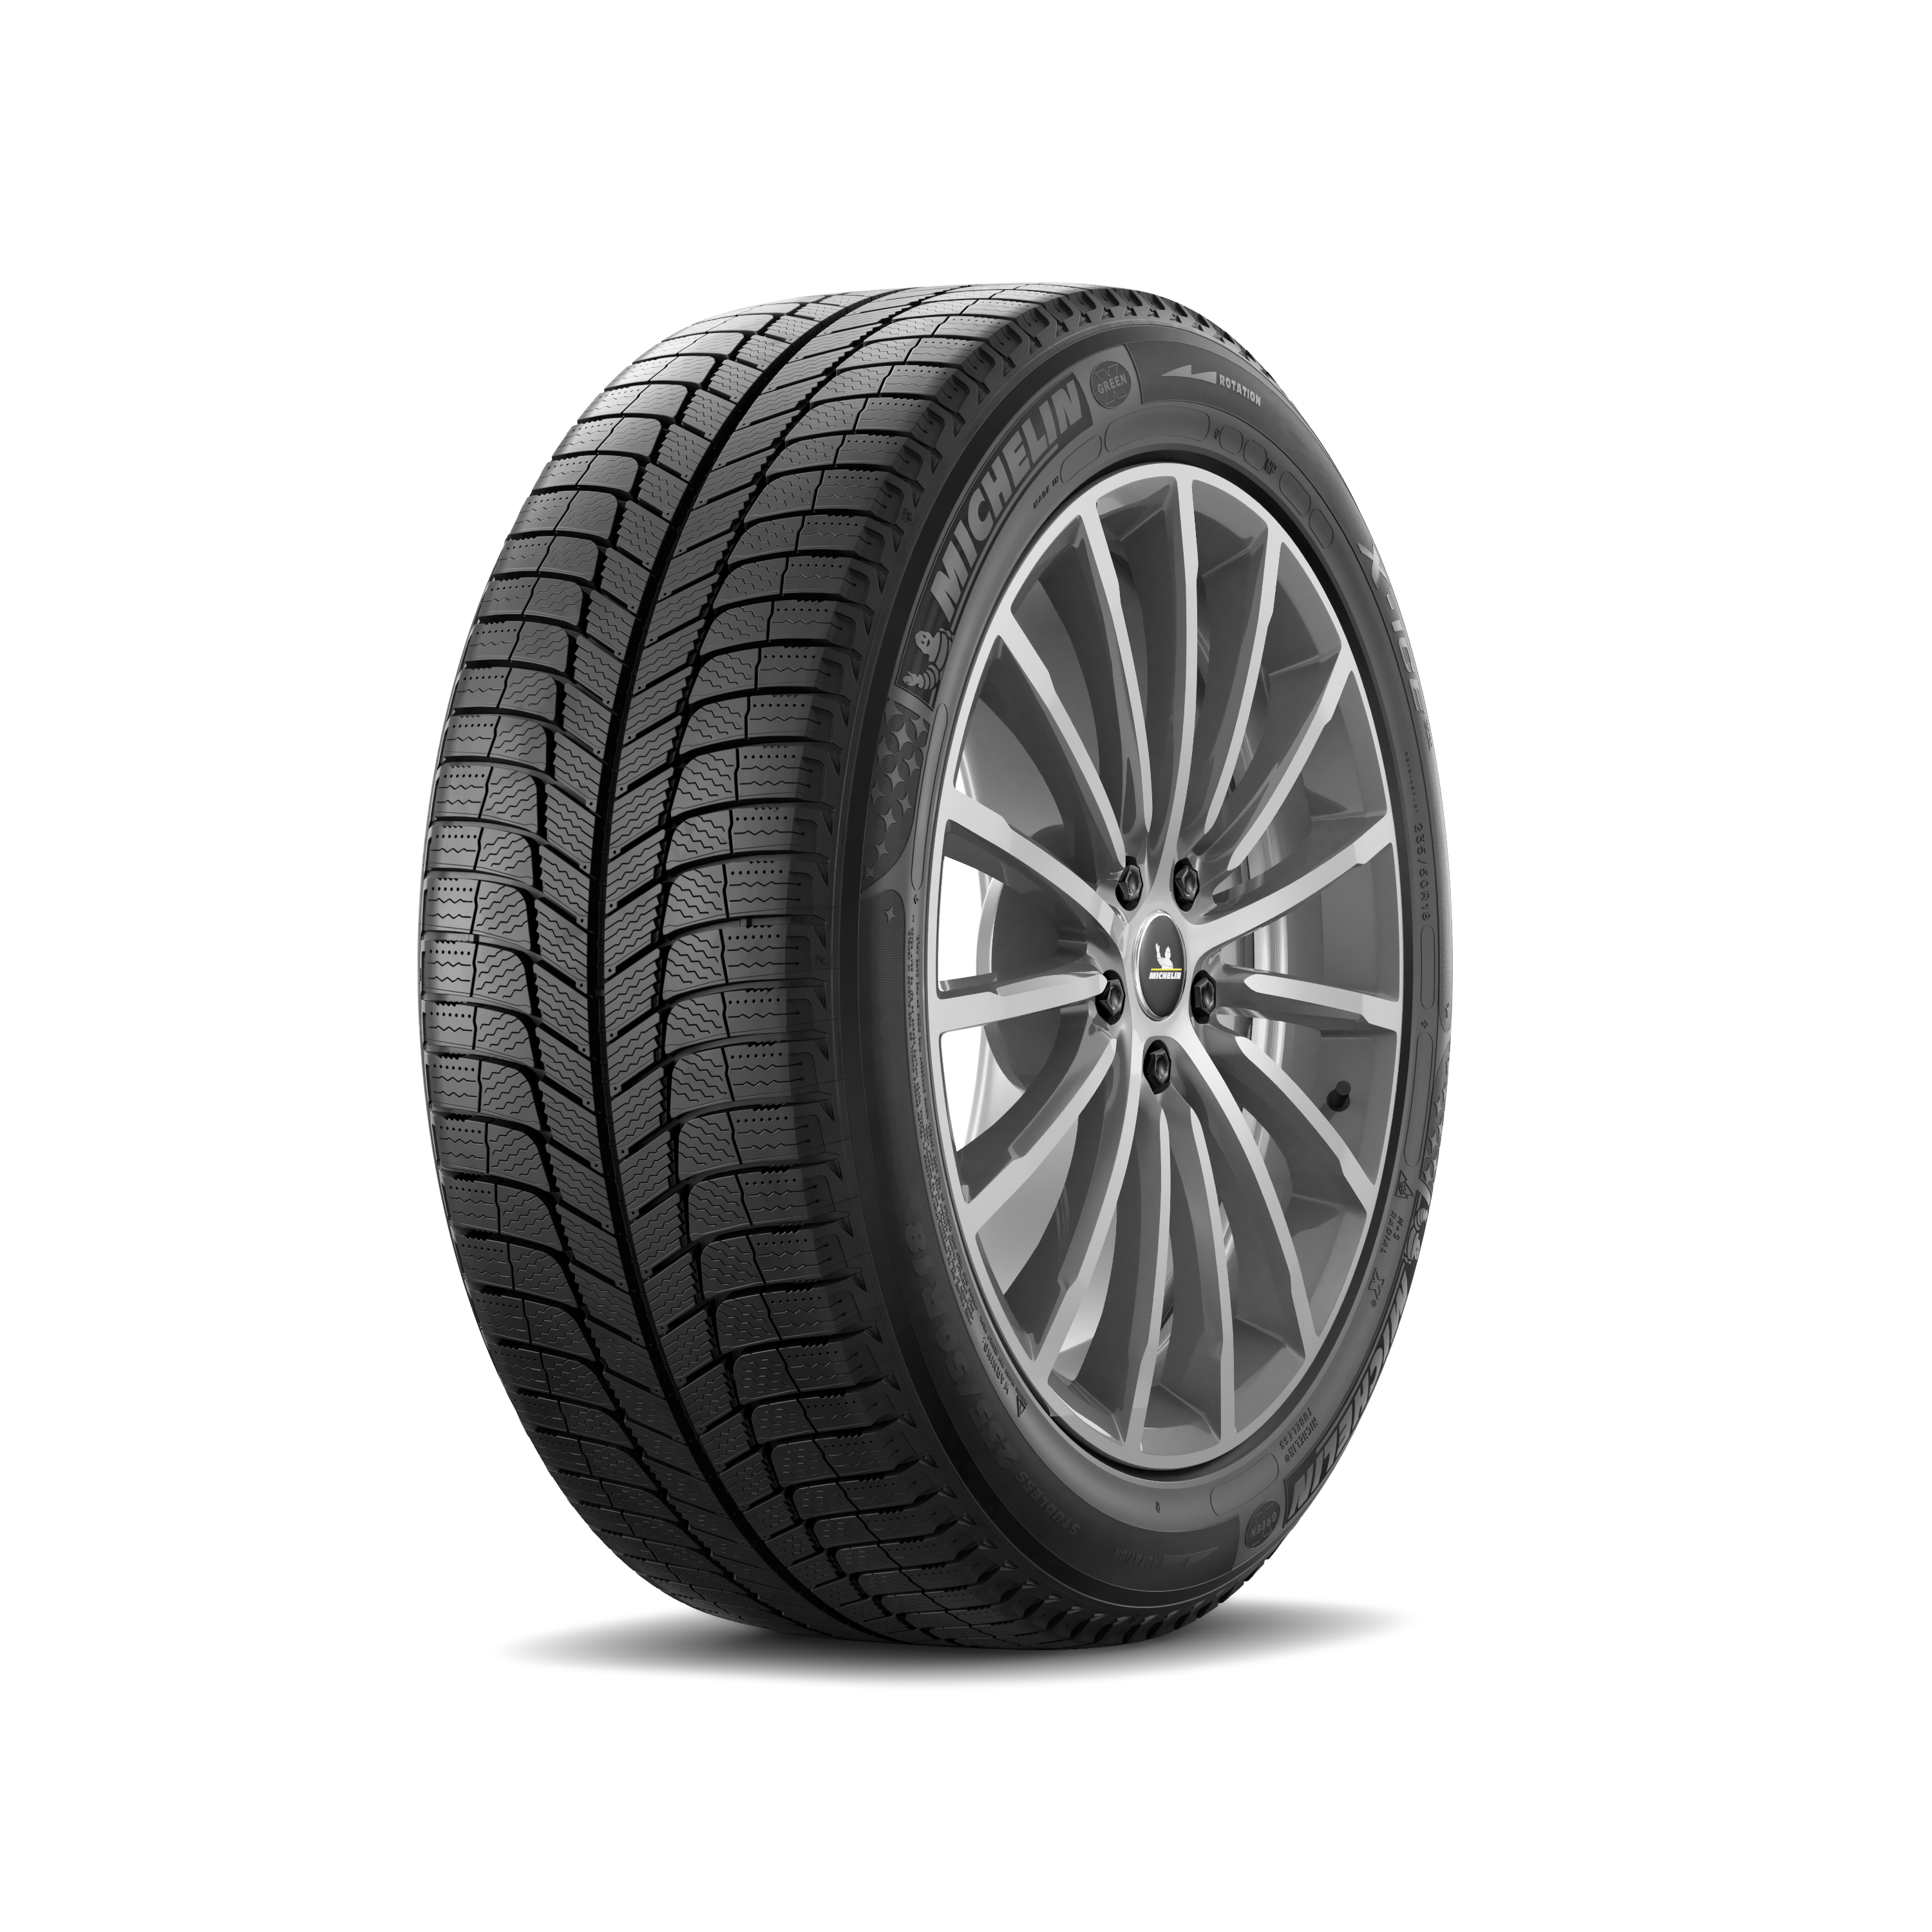 235/55R17 99H Michelin X-Ice Xi3 Winter Radial Tire